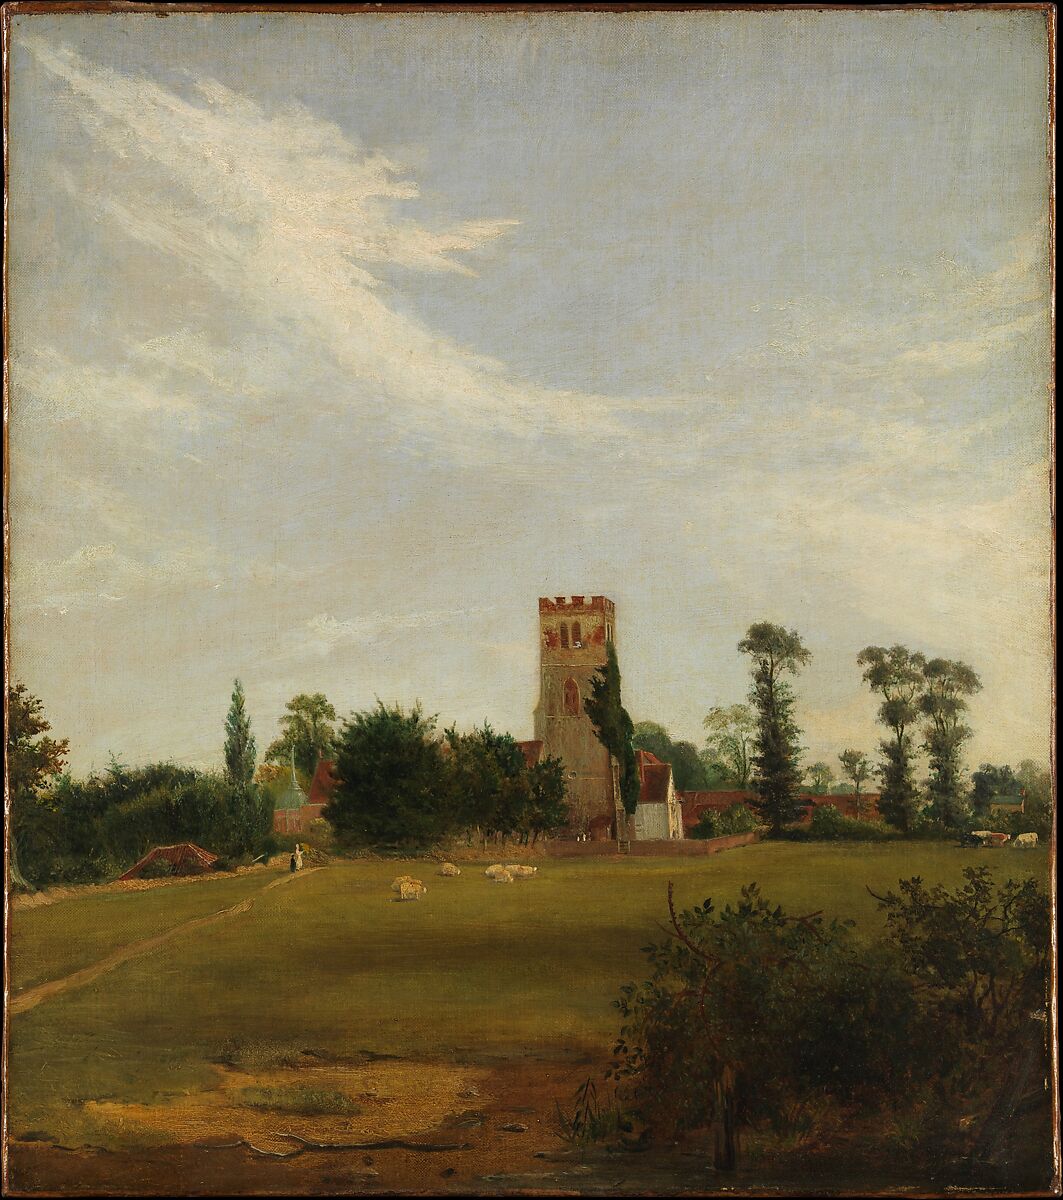 Tottenham Church, British Painter (ca. 1830), Oil on canvas 